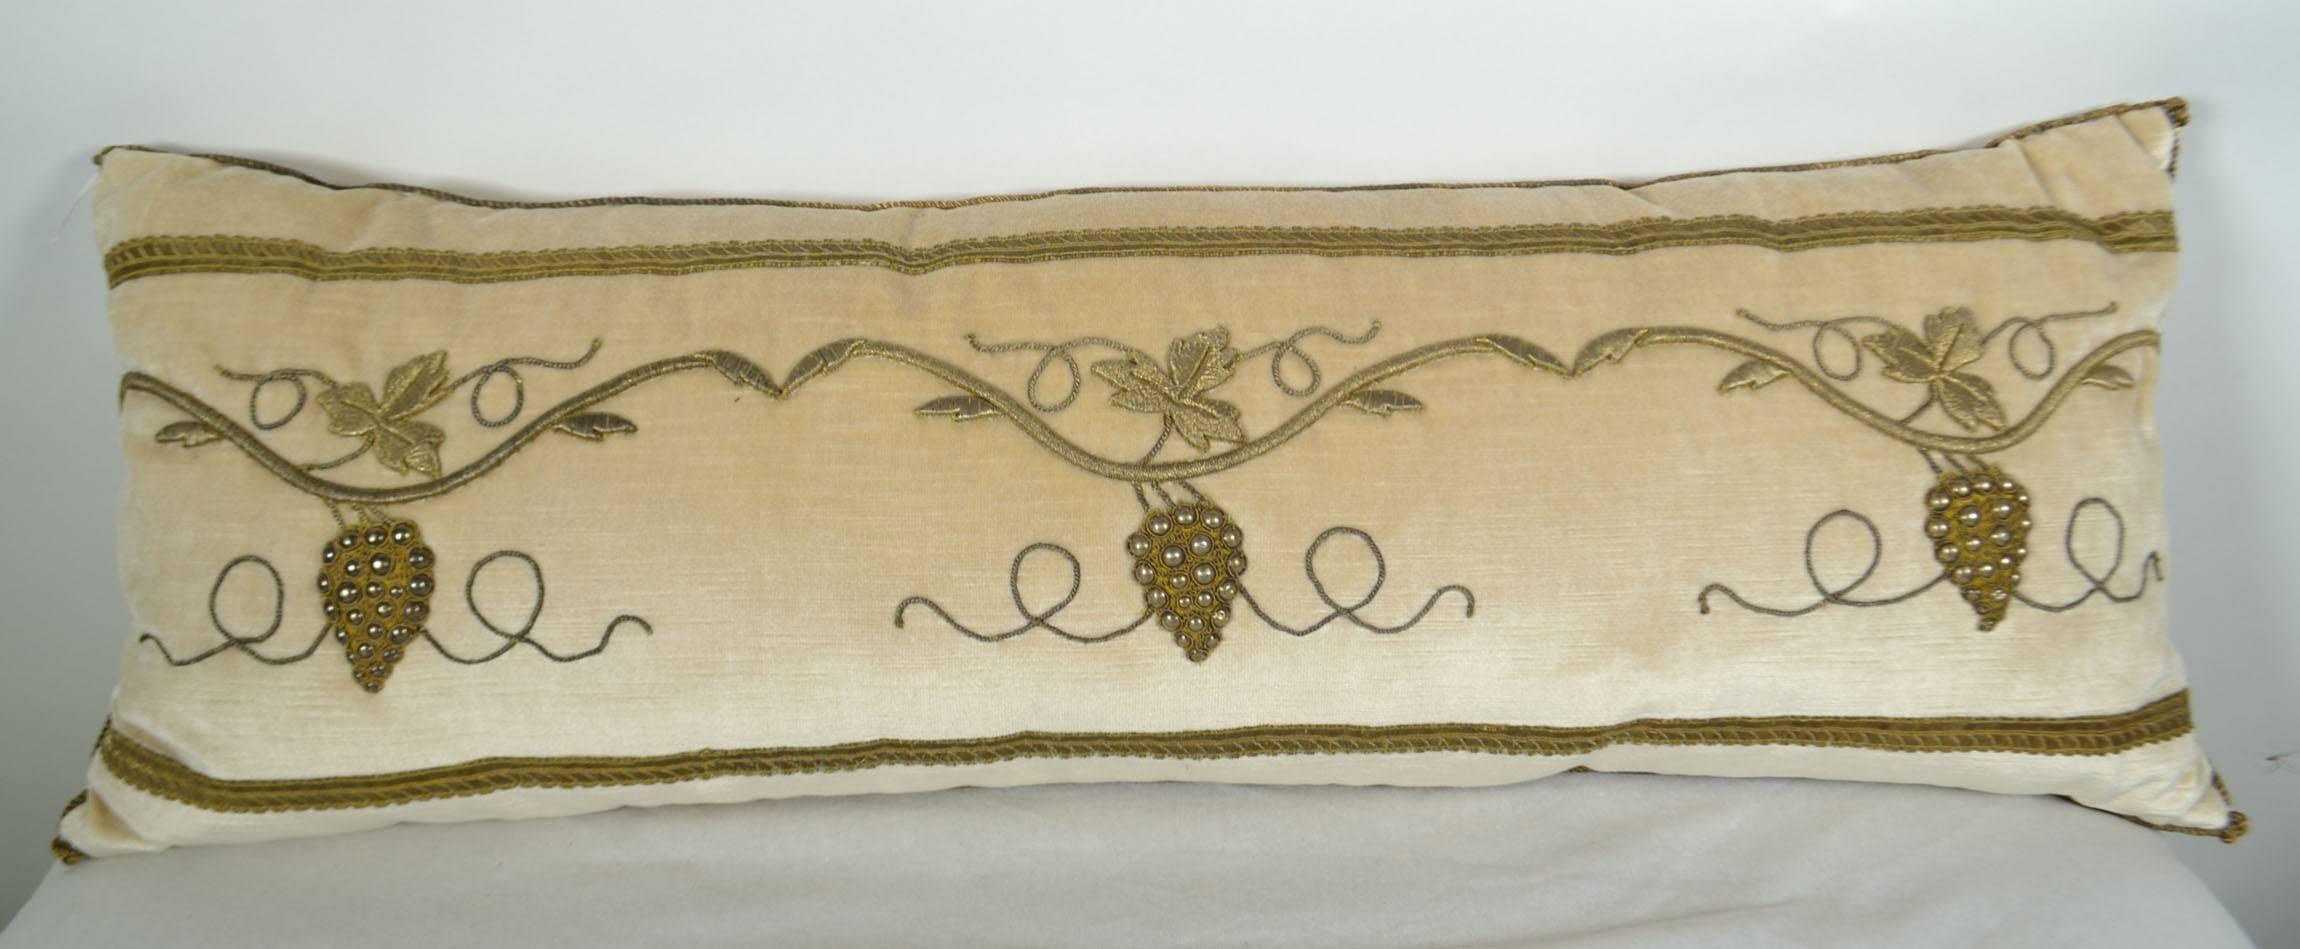 Antique raised gold metallic embroidery pillow, on vanilla velvet. Down filled.